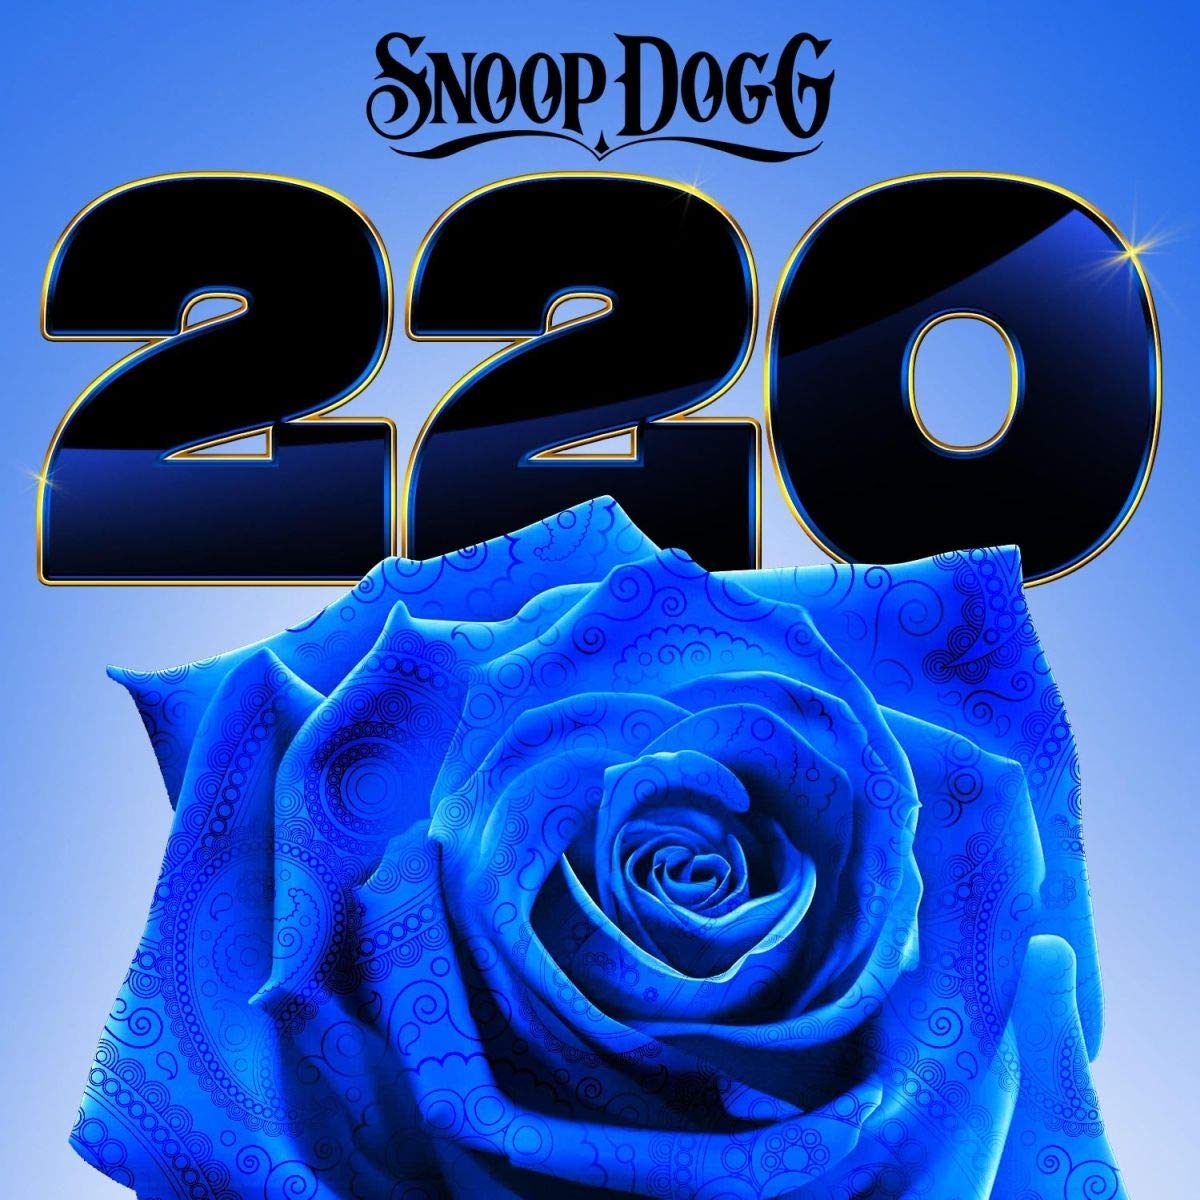 220 Snoop Dogg